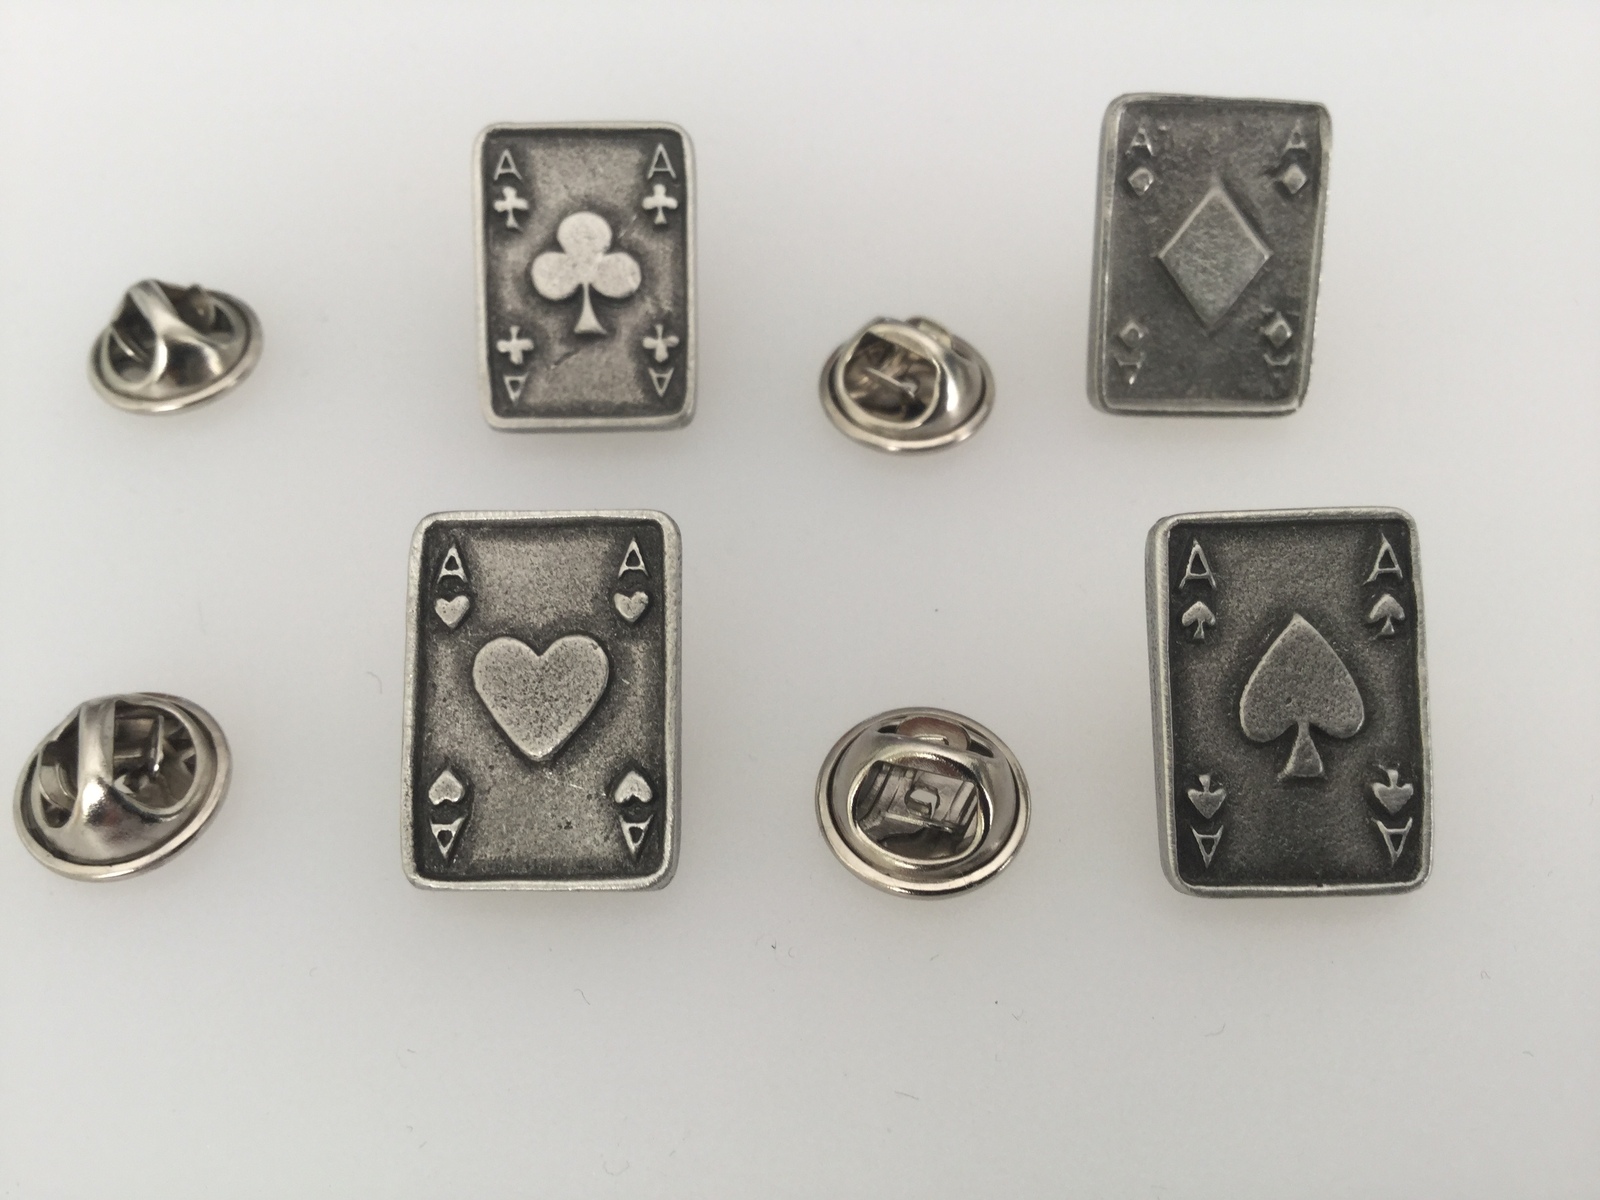 Playing Cards Pewter Lapel Pin Badge Set Of 4 Handmade In UK - $20.00